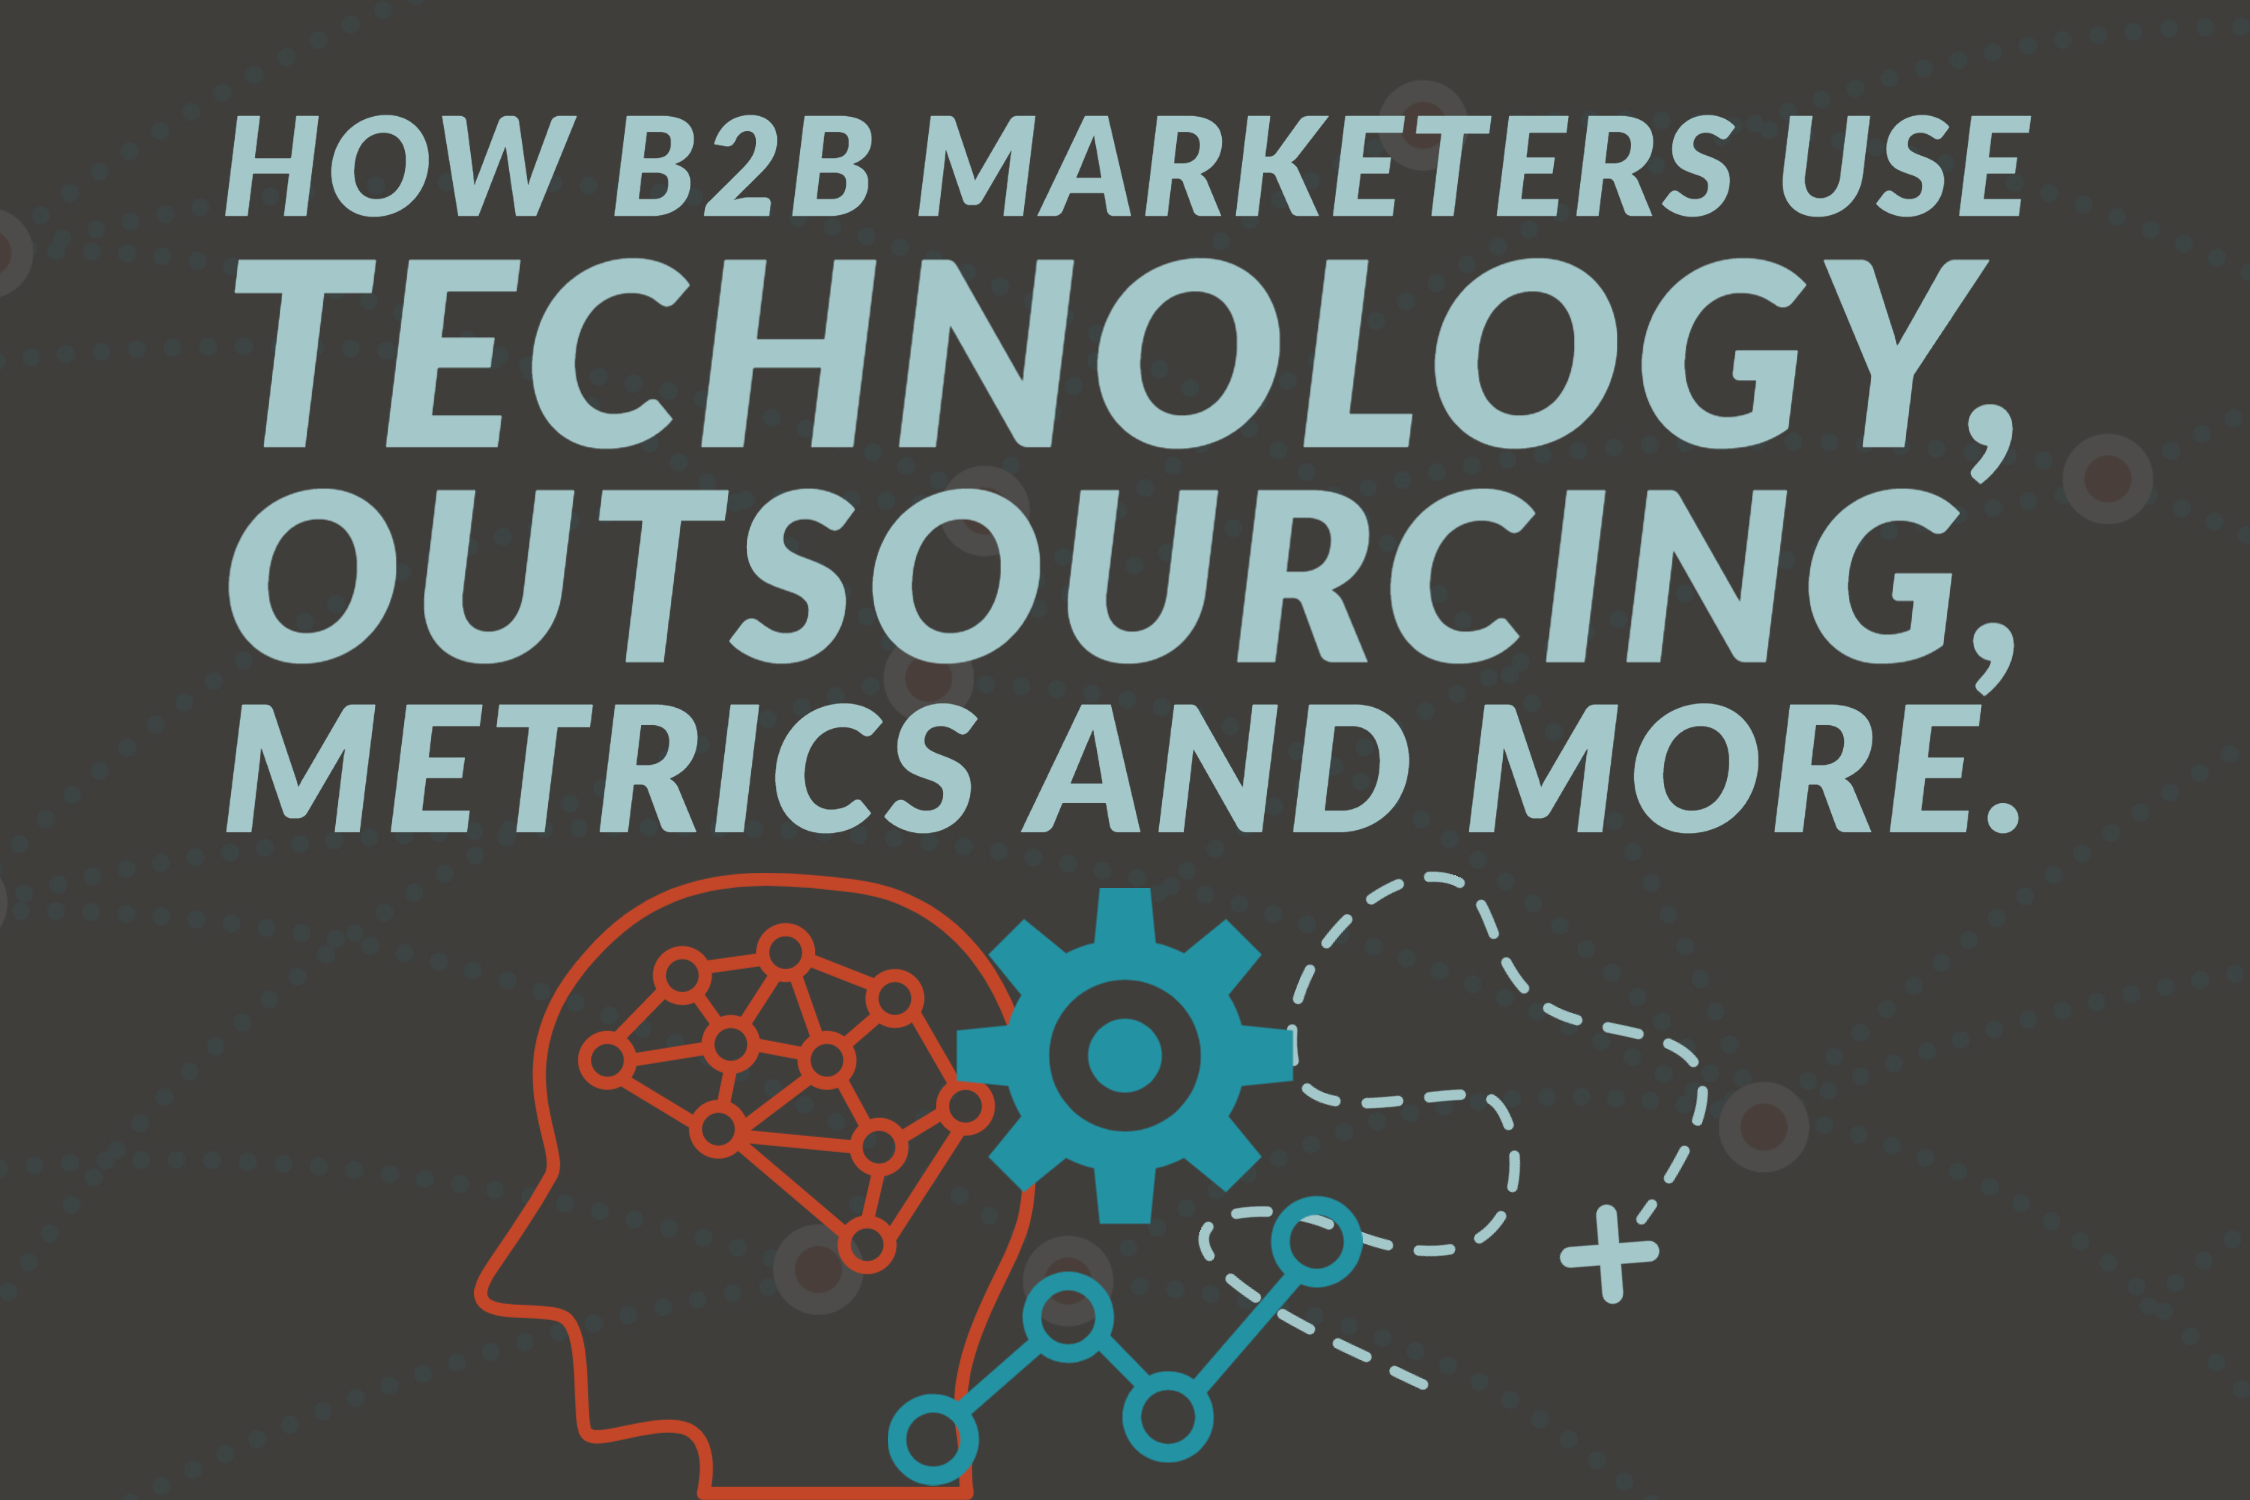 B2B Content Marketing Statistics For 2020